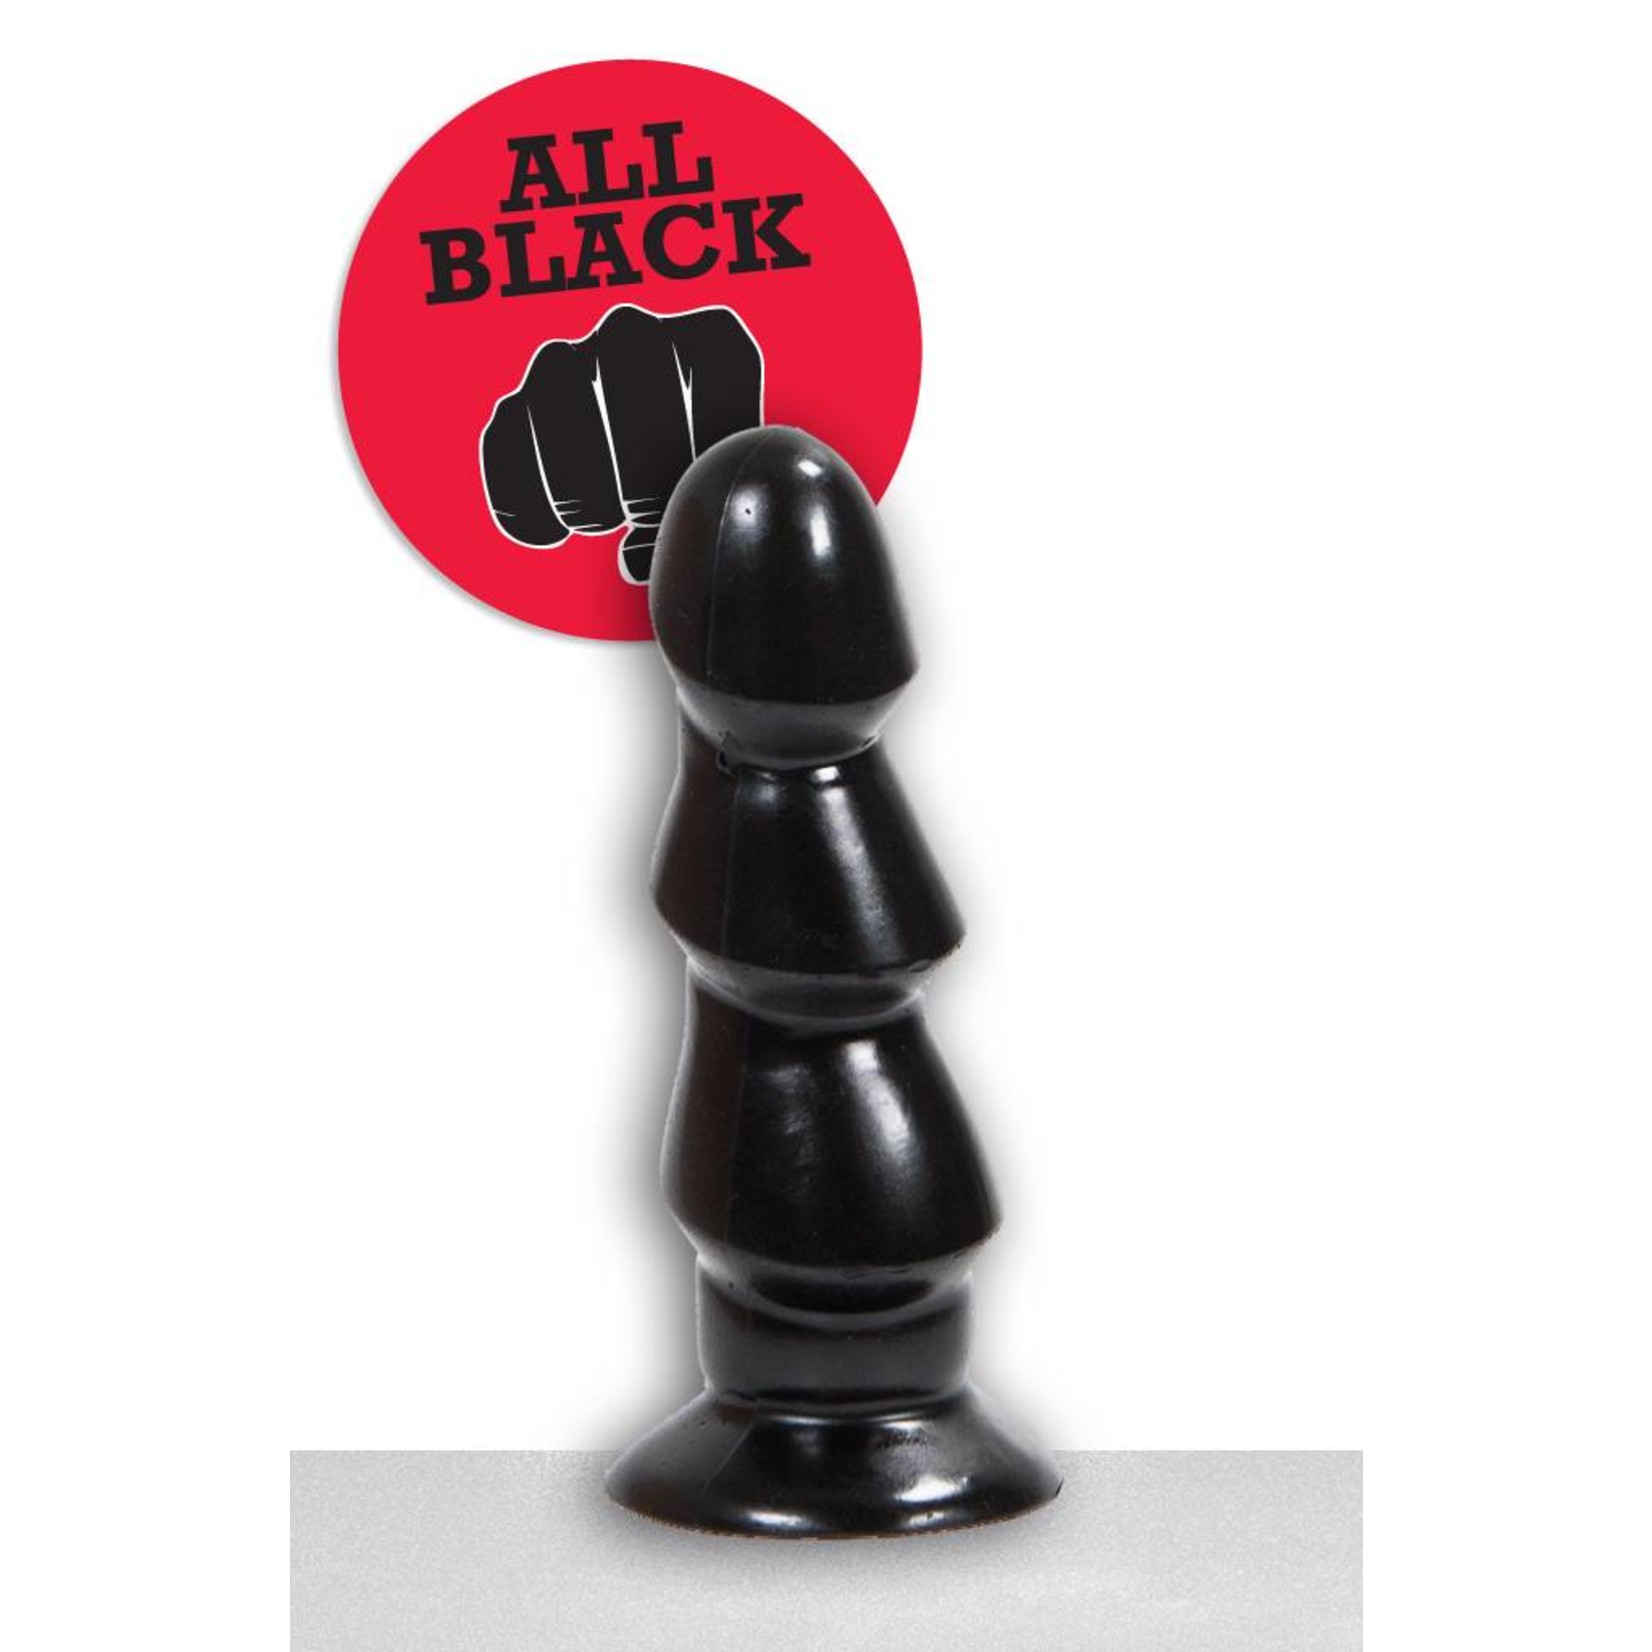 All Black All Black Dildo - AB 40